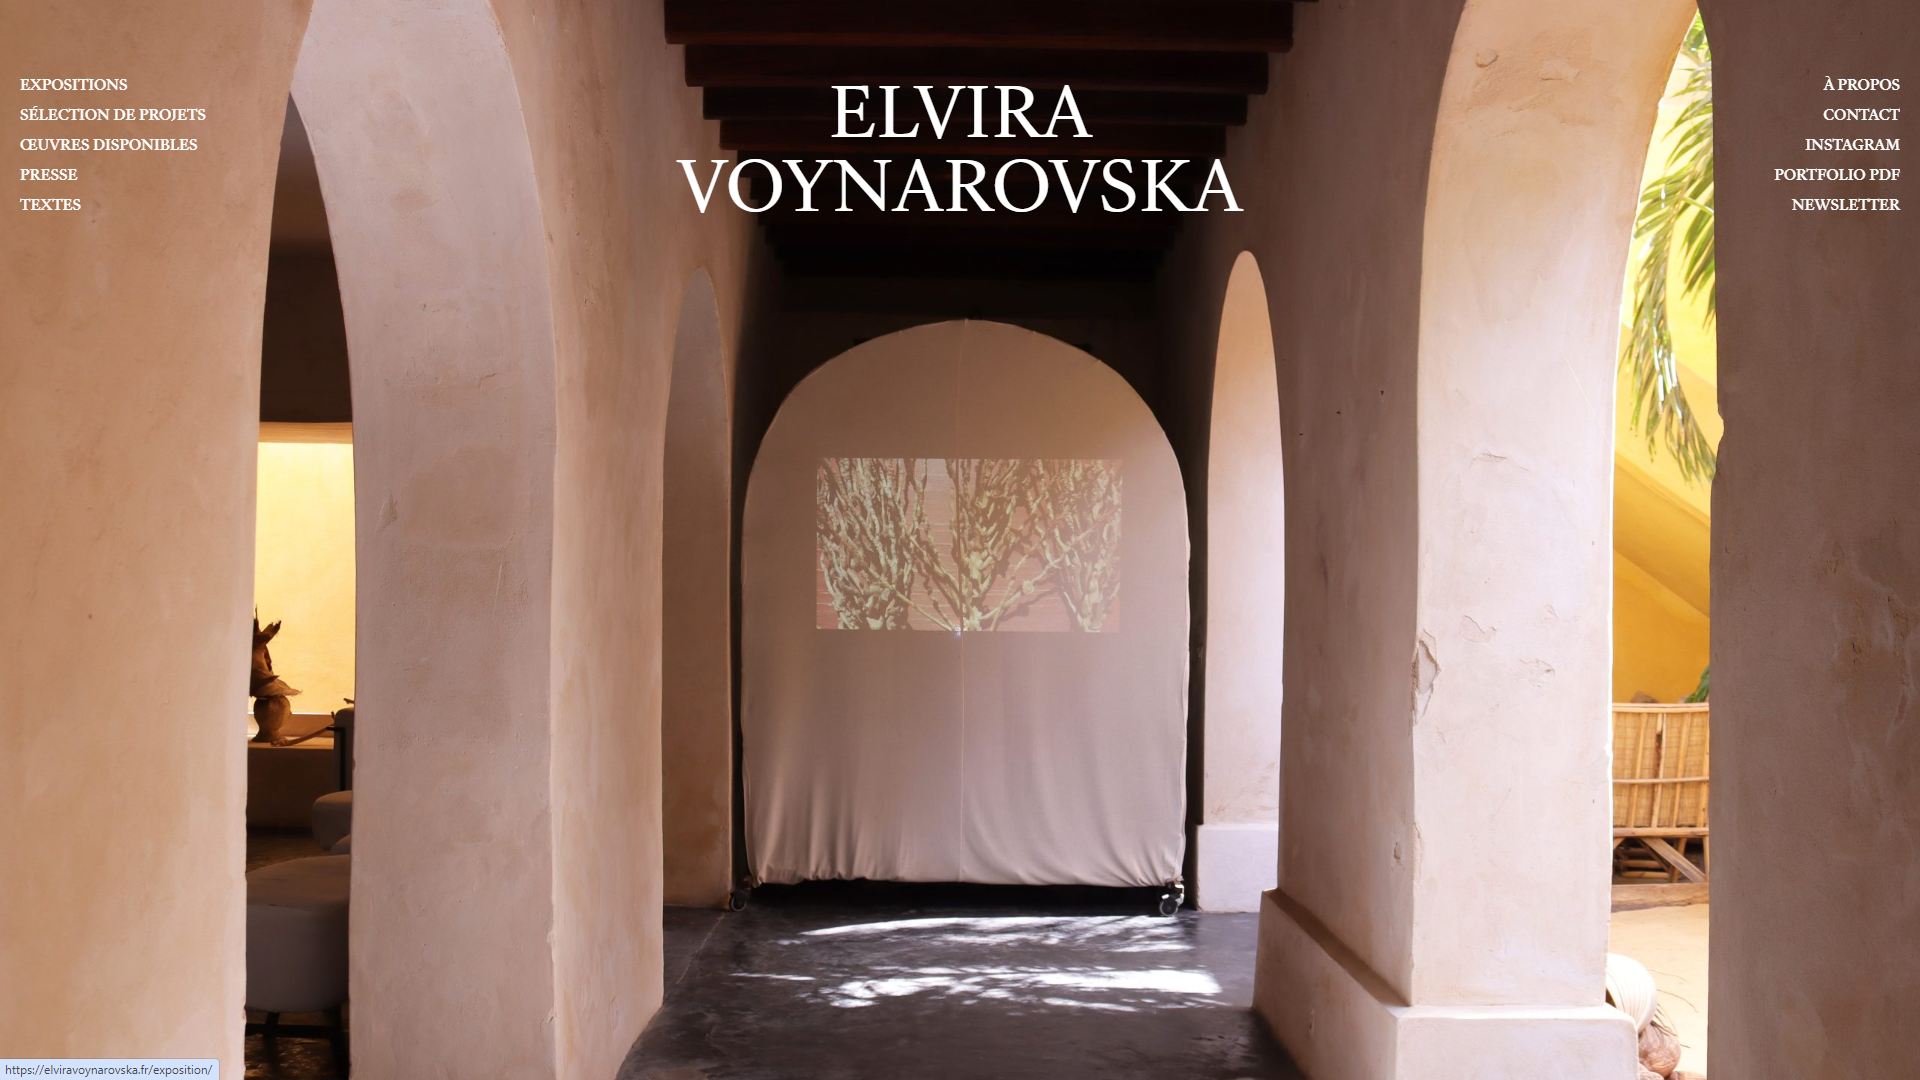 Image de présentation de Elvira Voynarovska